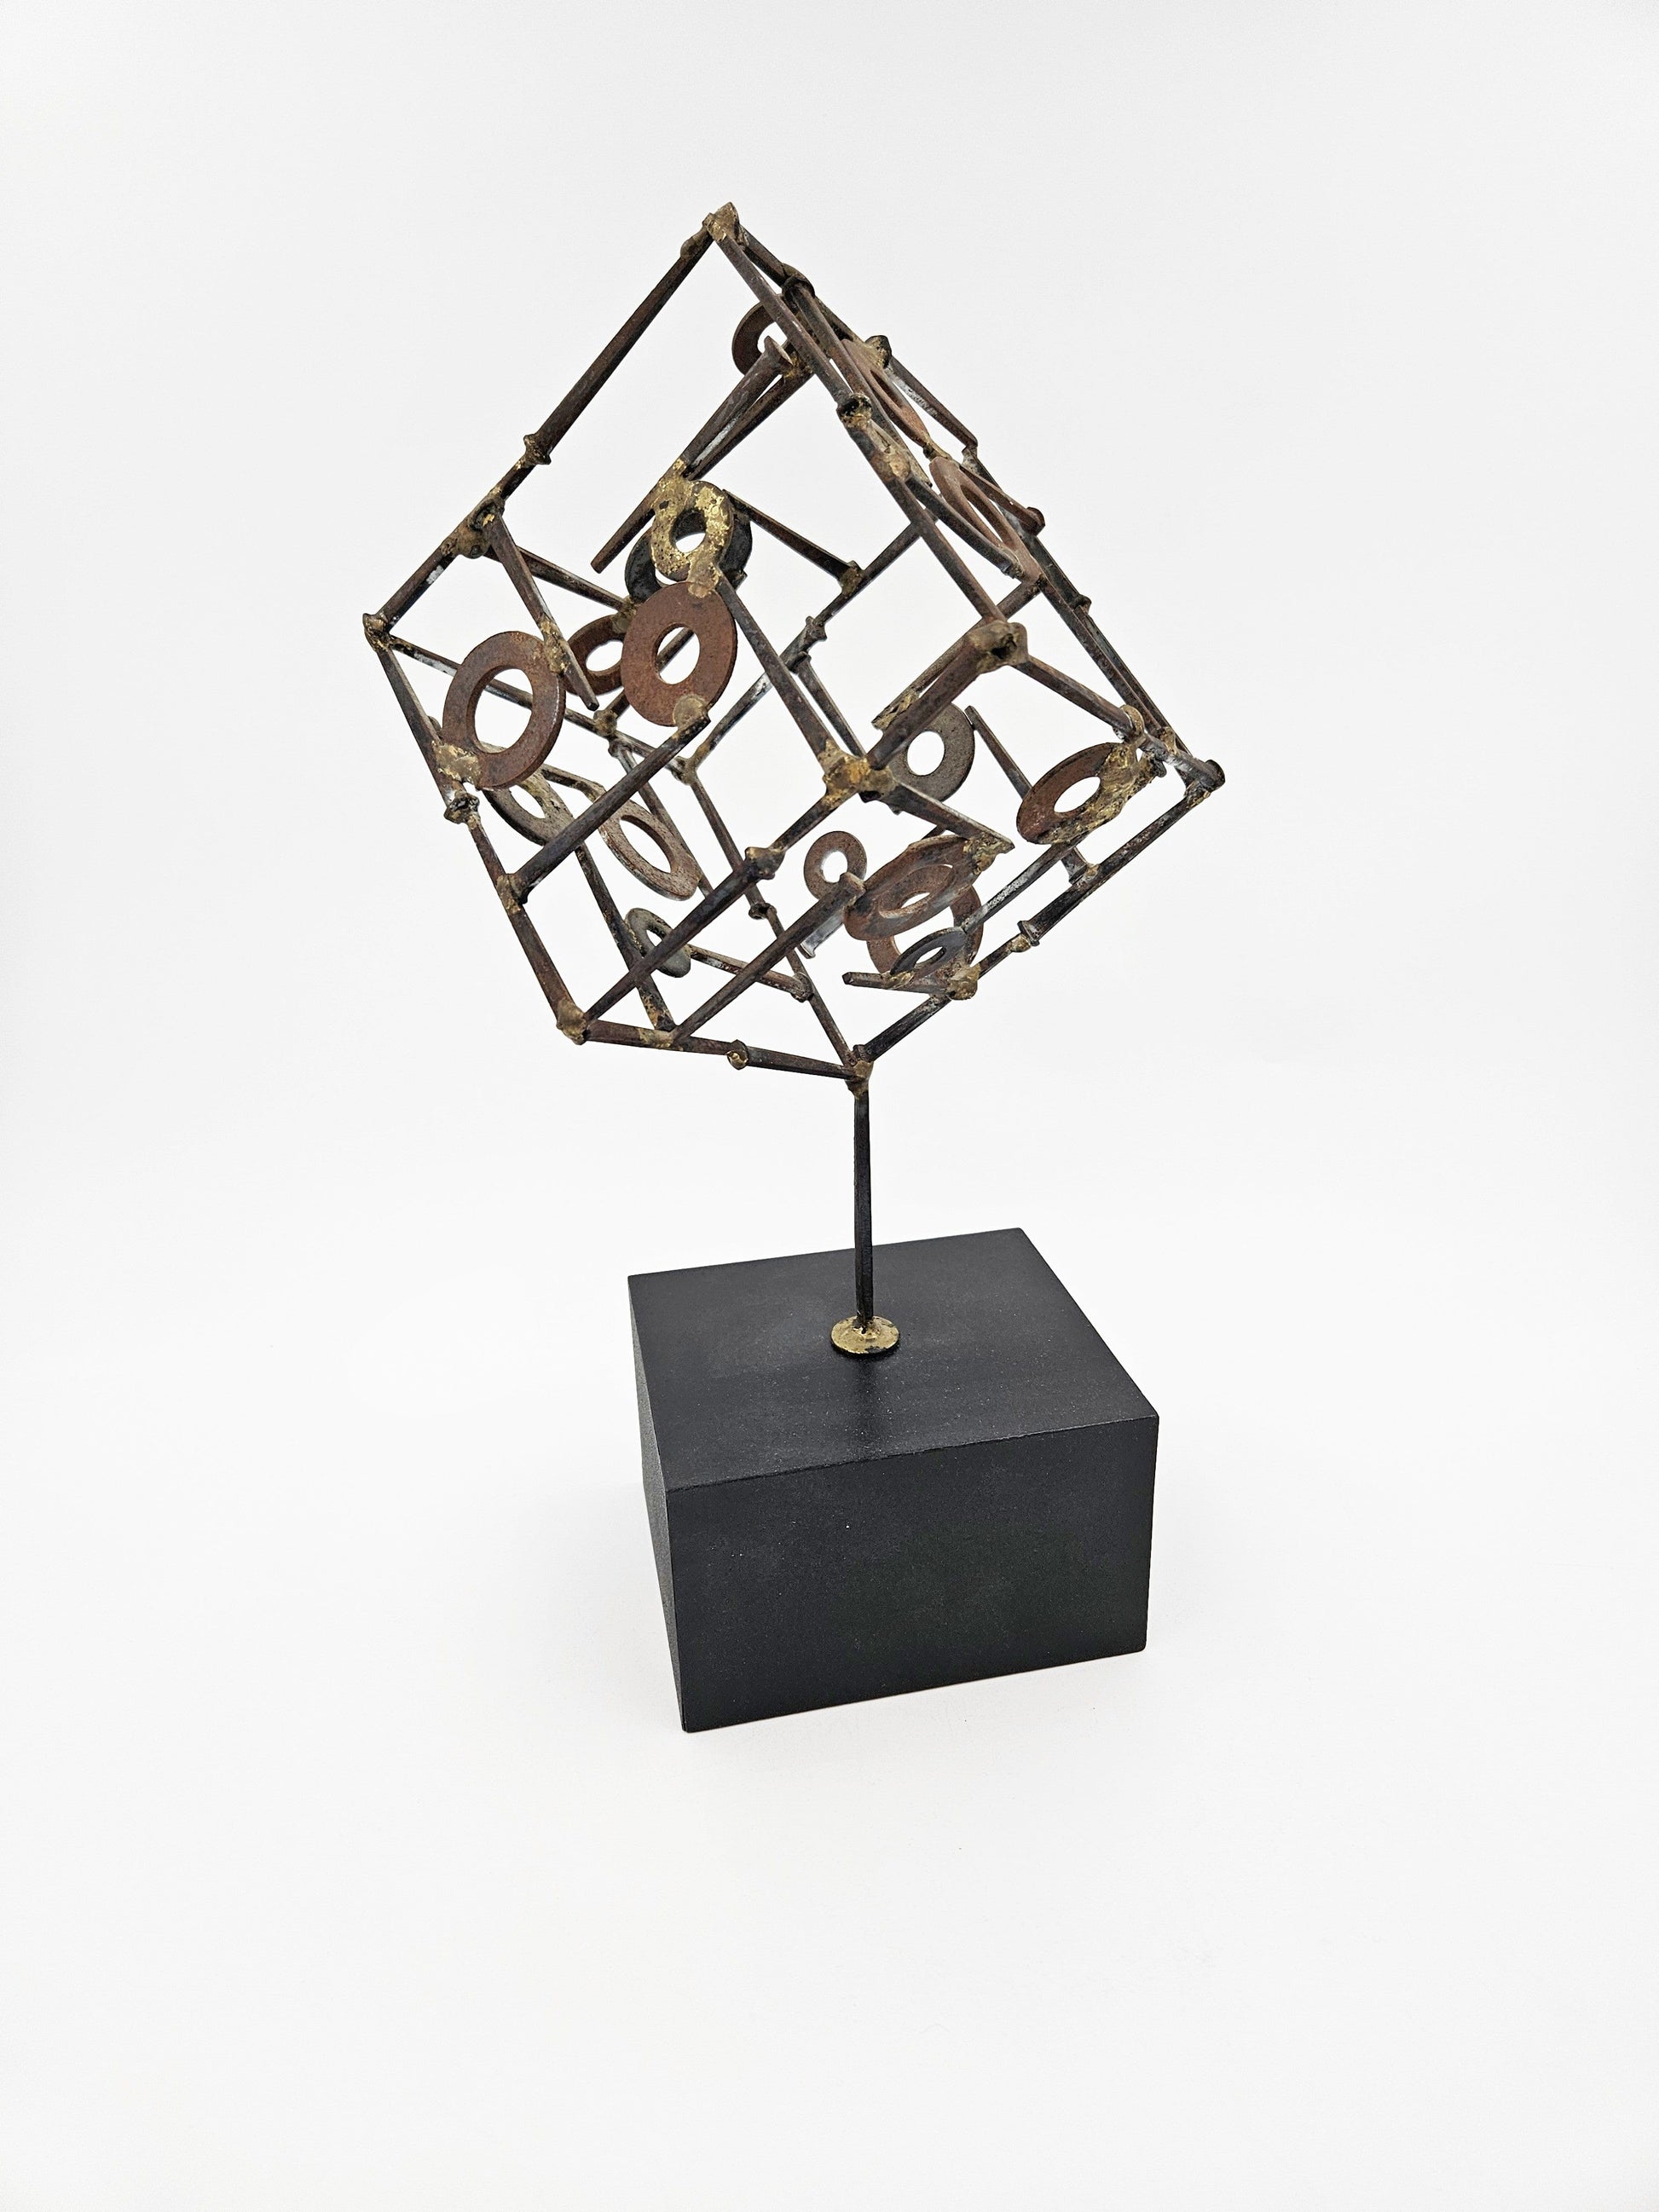 Sculpture Sculpture Abstract Constructivism Nails and Washers 3-D Cube Sculpture Circa 1960s